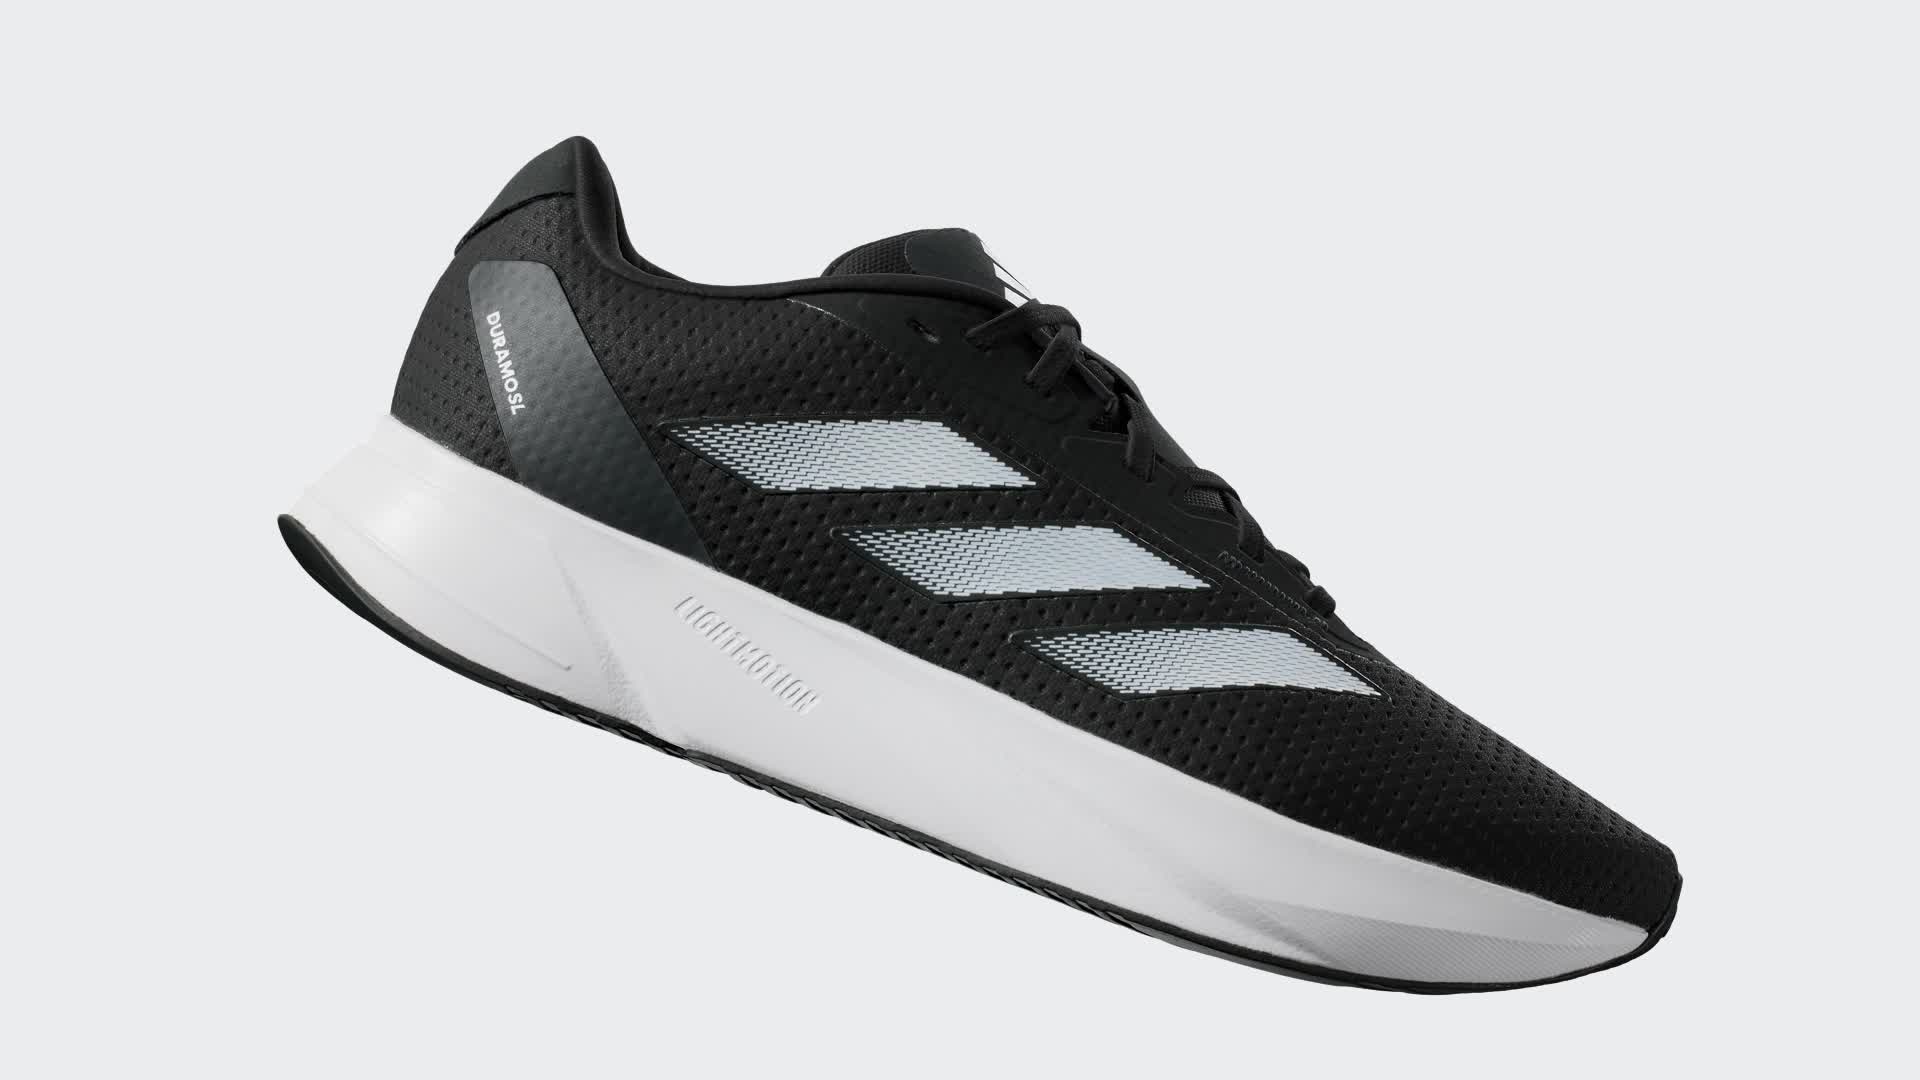 Adidas Men's Duramo SL Running Shoes, Size 12, Black/White/Carbon